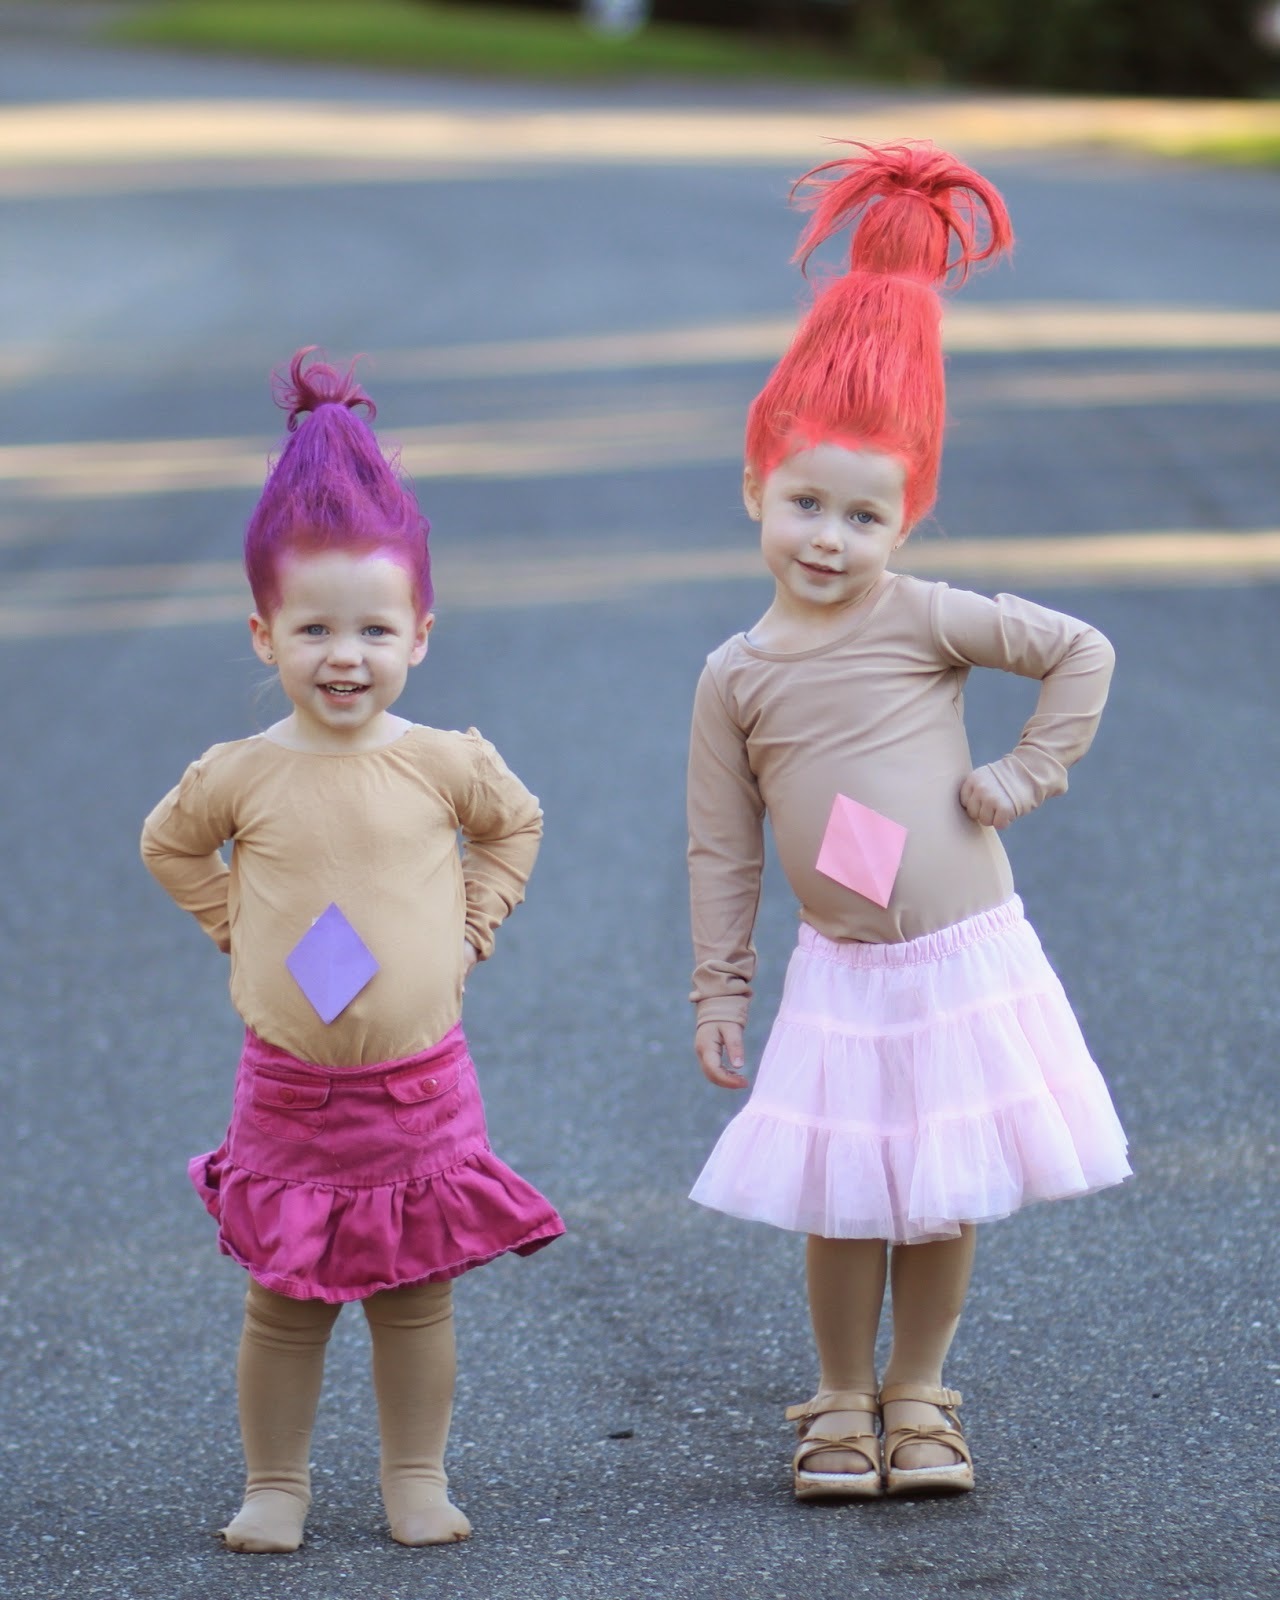 Halloween Kostüm Ideen für Geschwister: Die immer gutgelaunten Trolle feiern Halloween